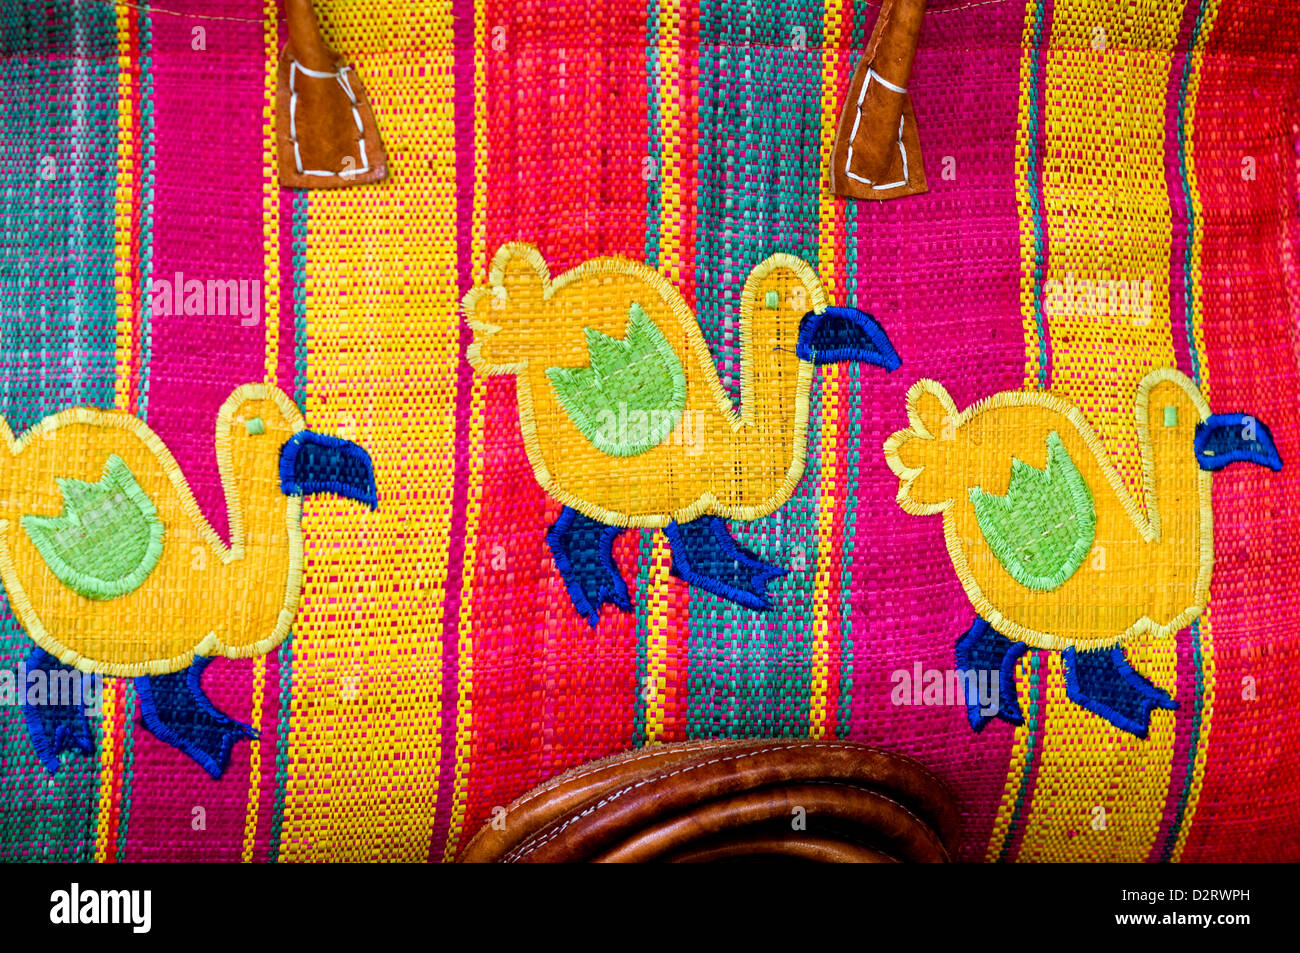 bag with dodo motif, central market, port louis, mauritius Stock Photo